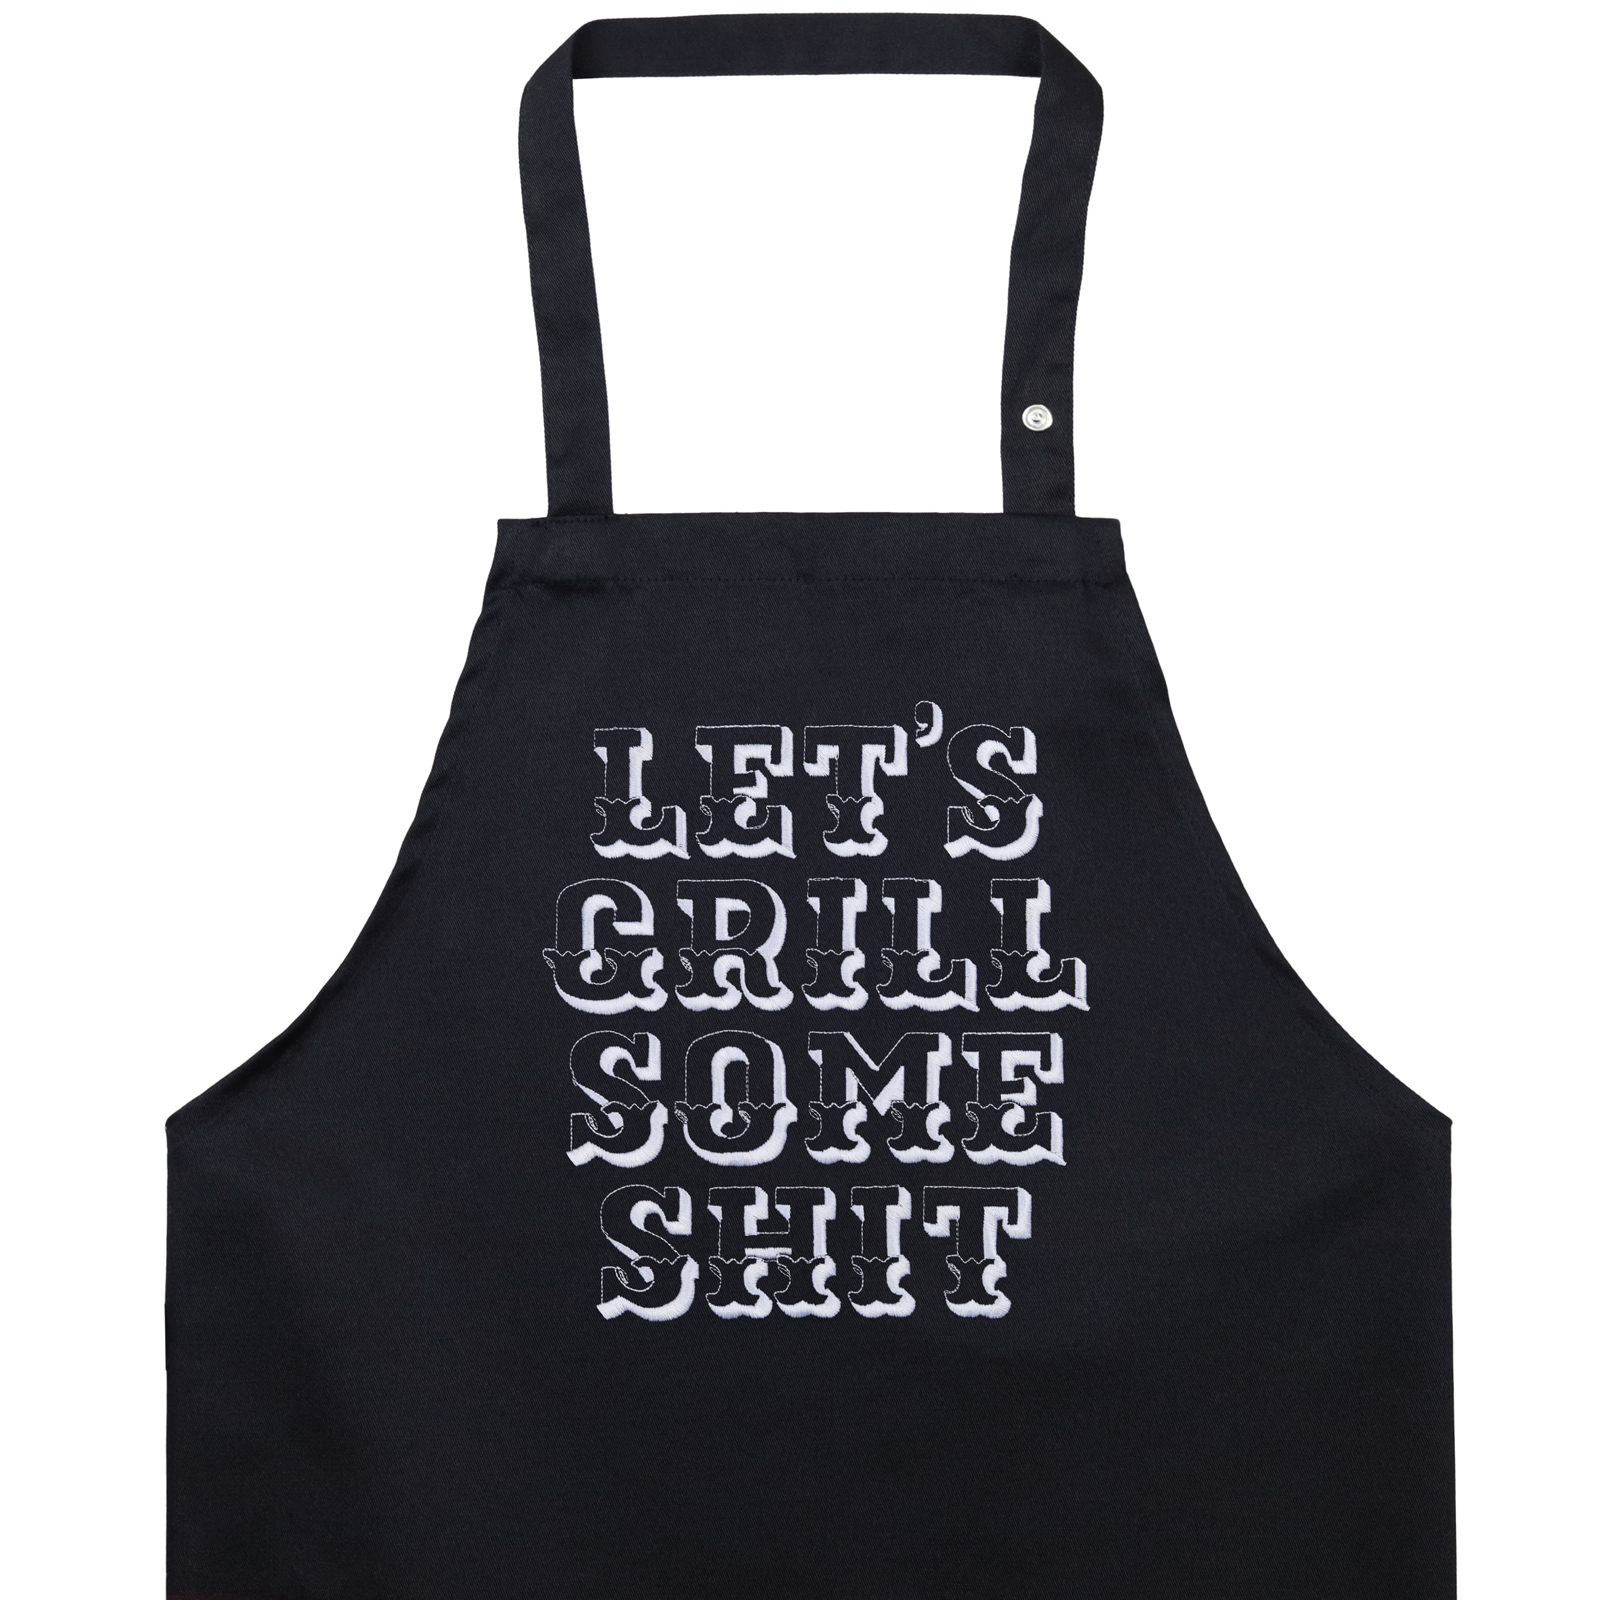 Let's grill some shit - Grillschürze